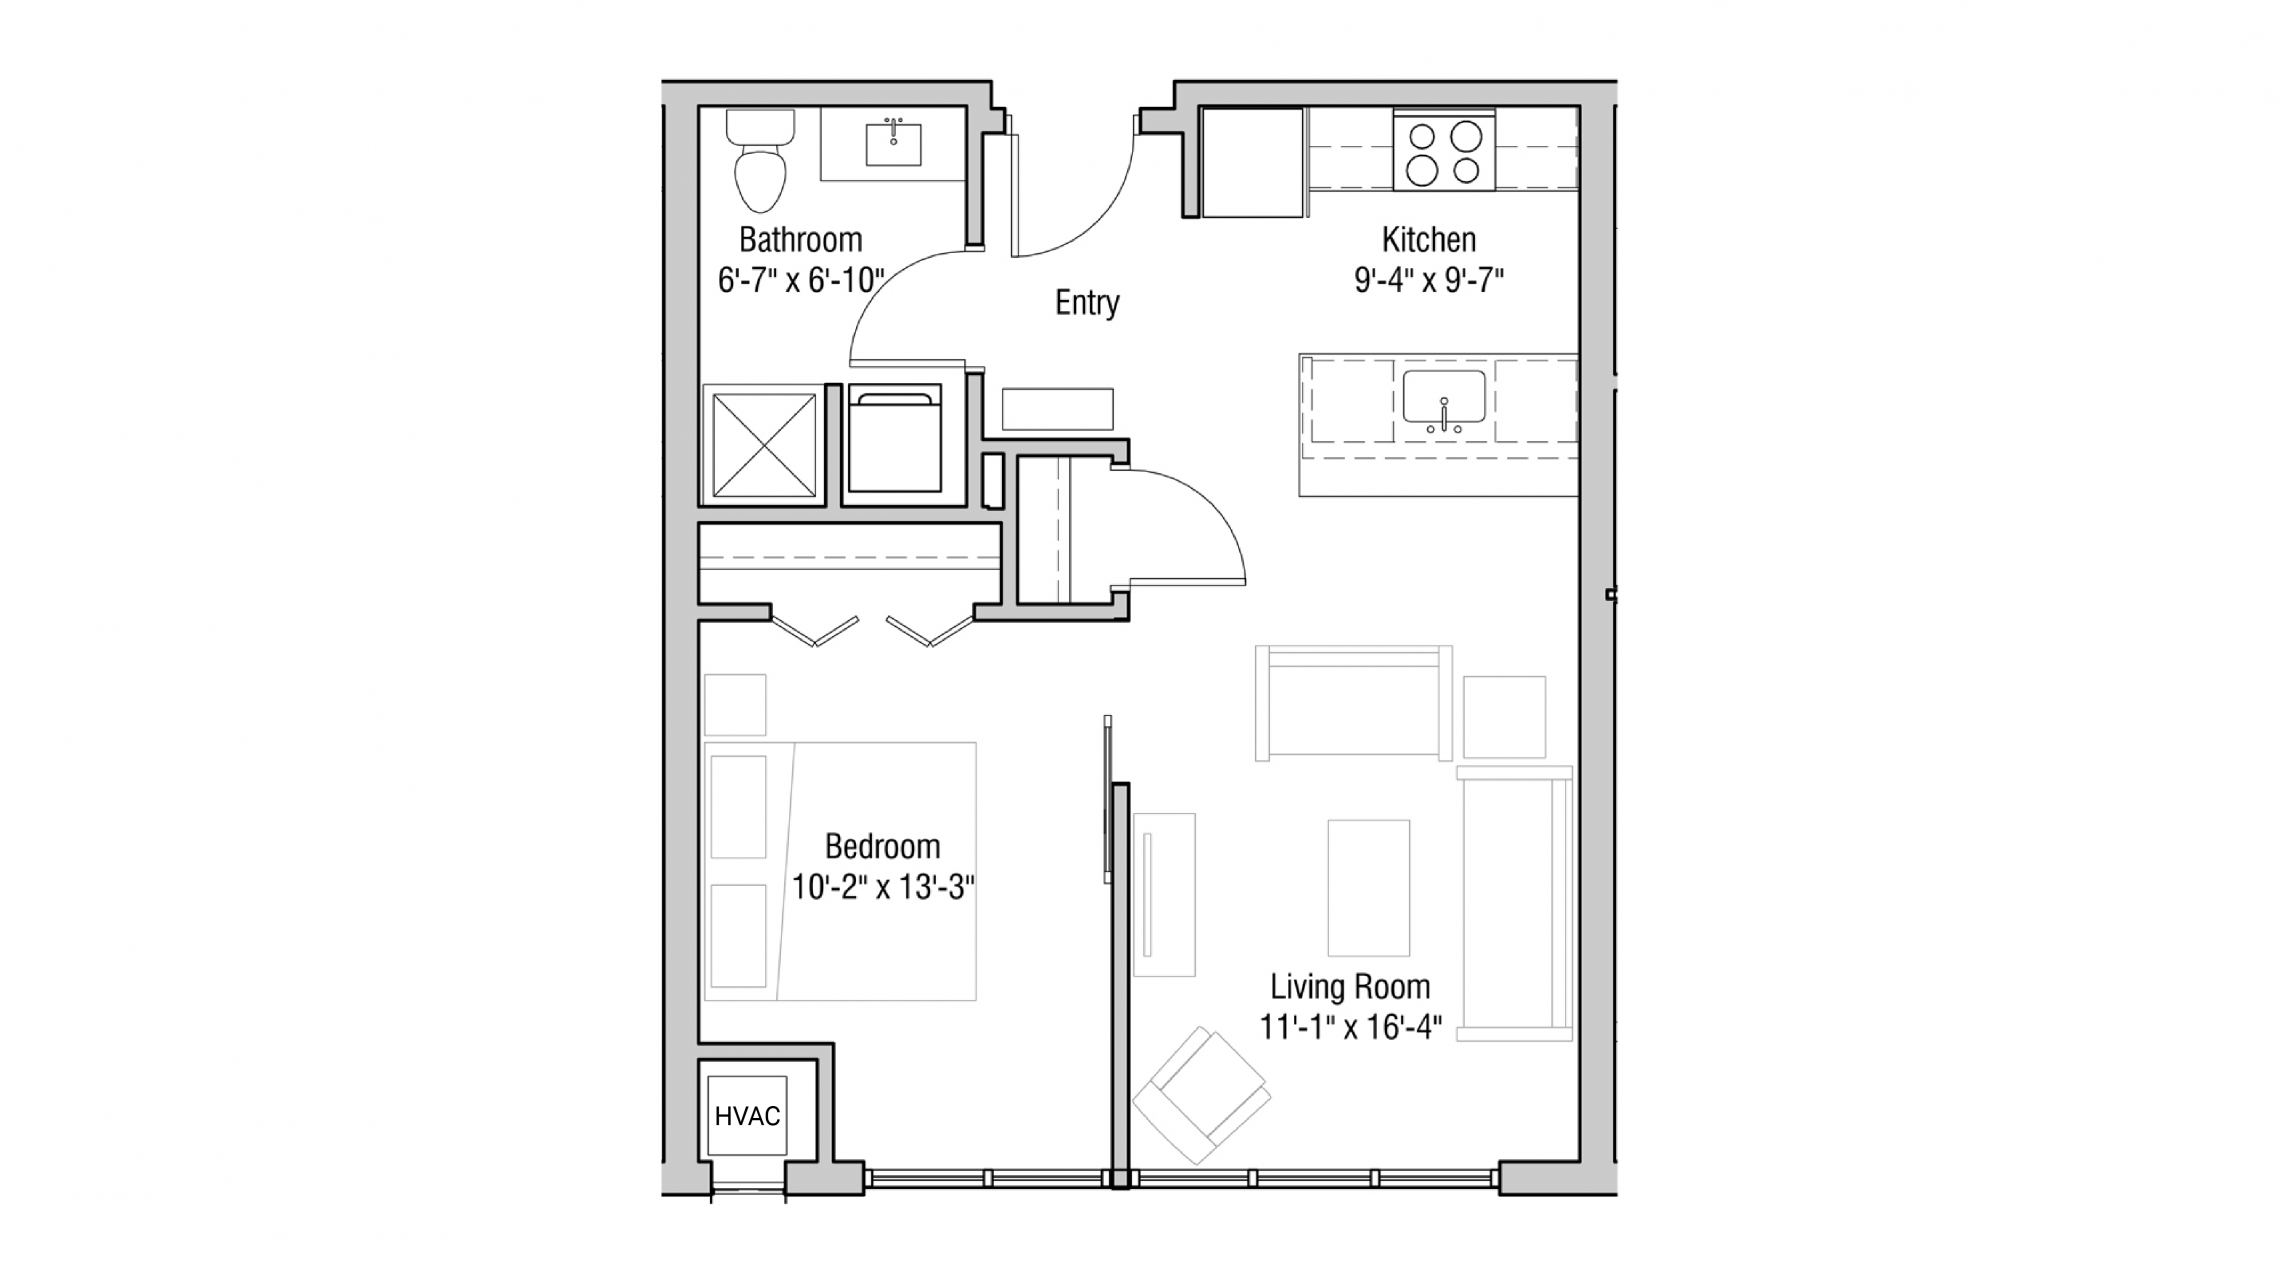 ULI Quarter Row 305 - One Bedroom, One Bathroom